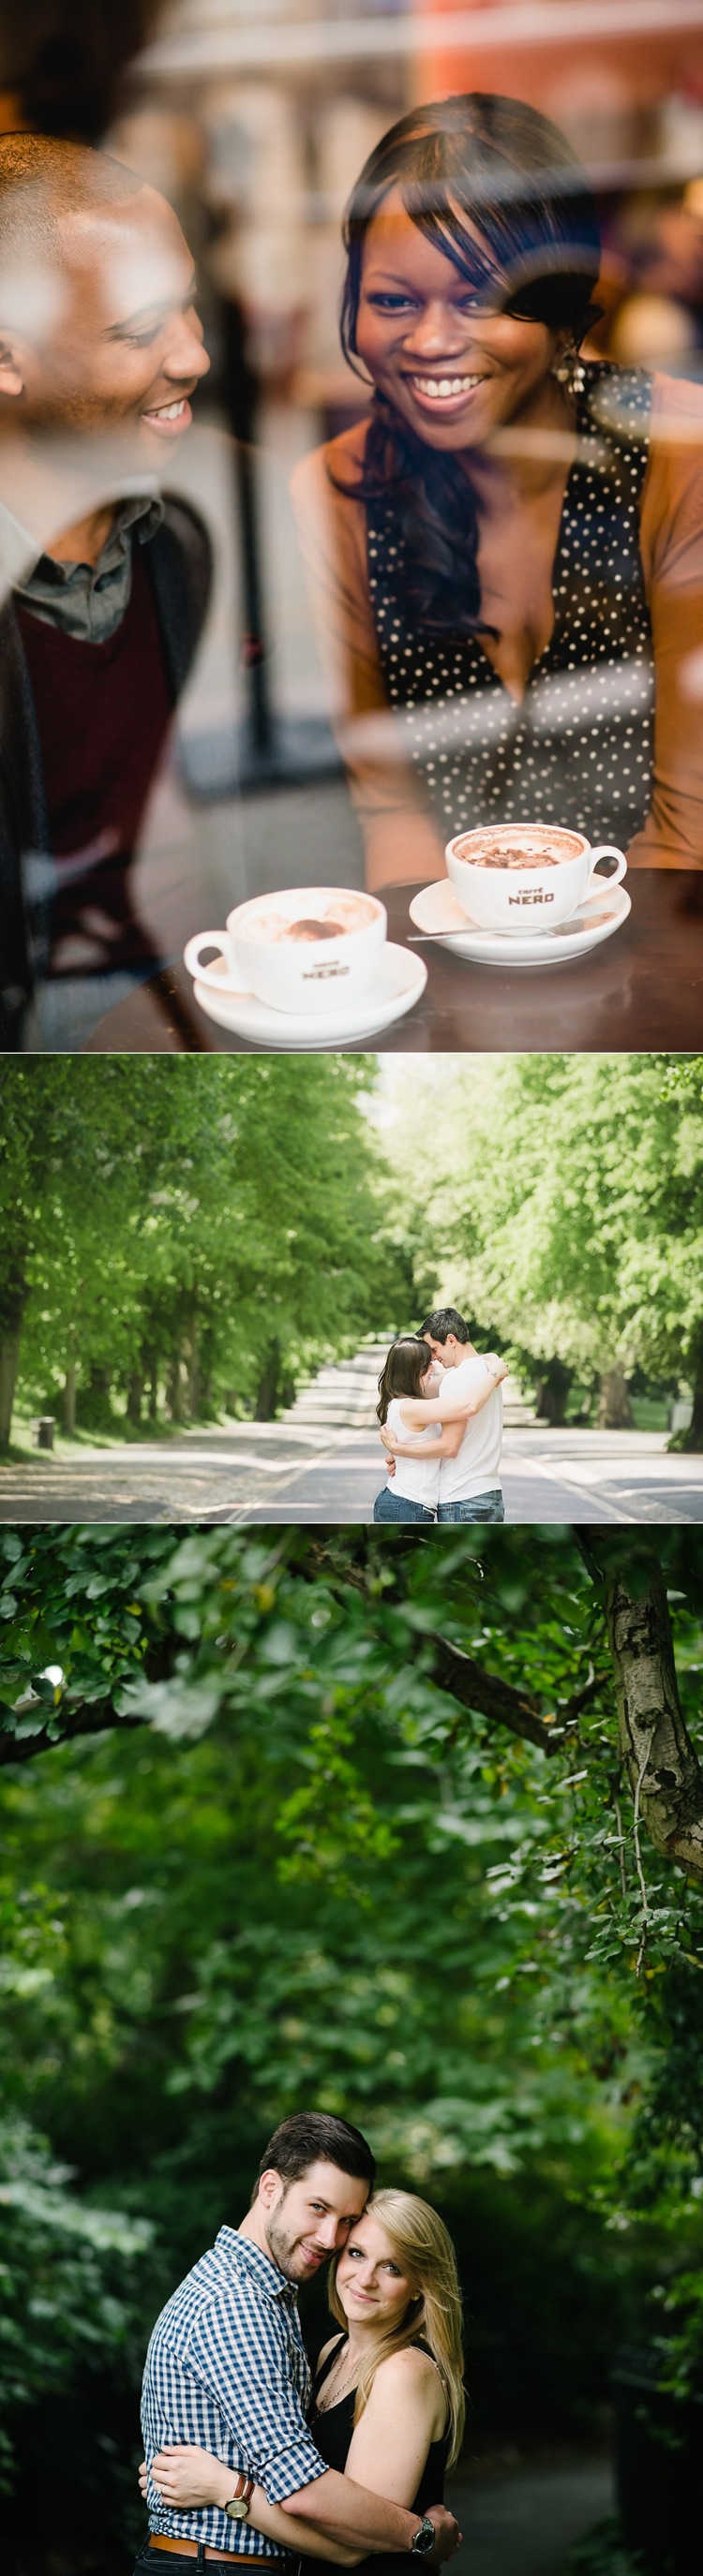 london best engagement wedding photographer 2014 lily sawyer photo .jpg